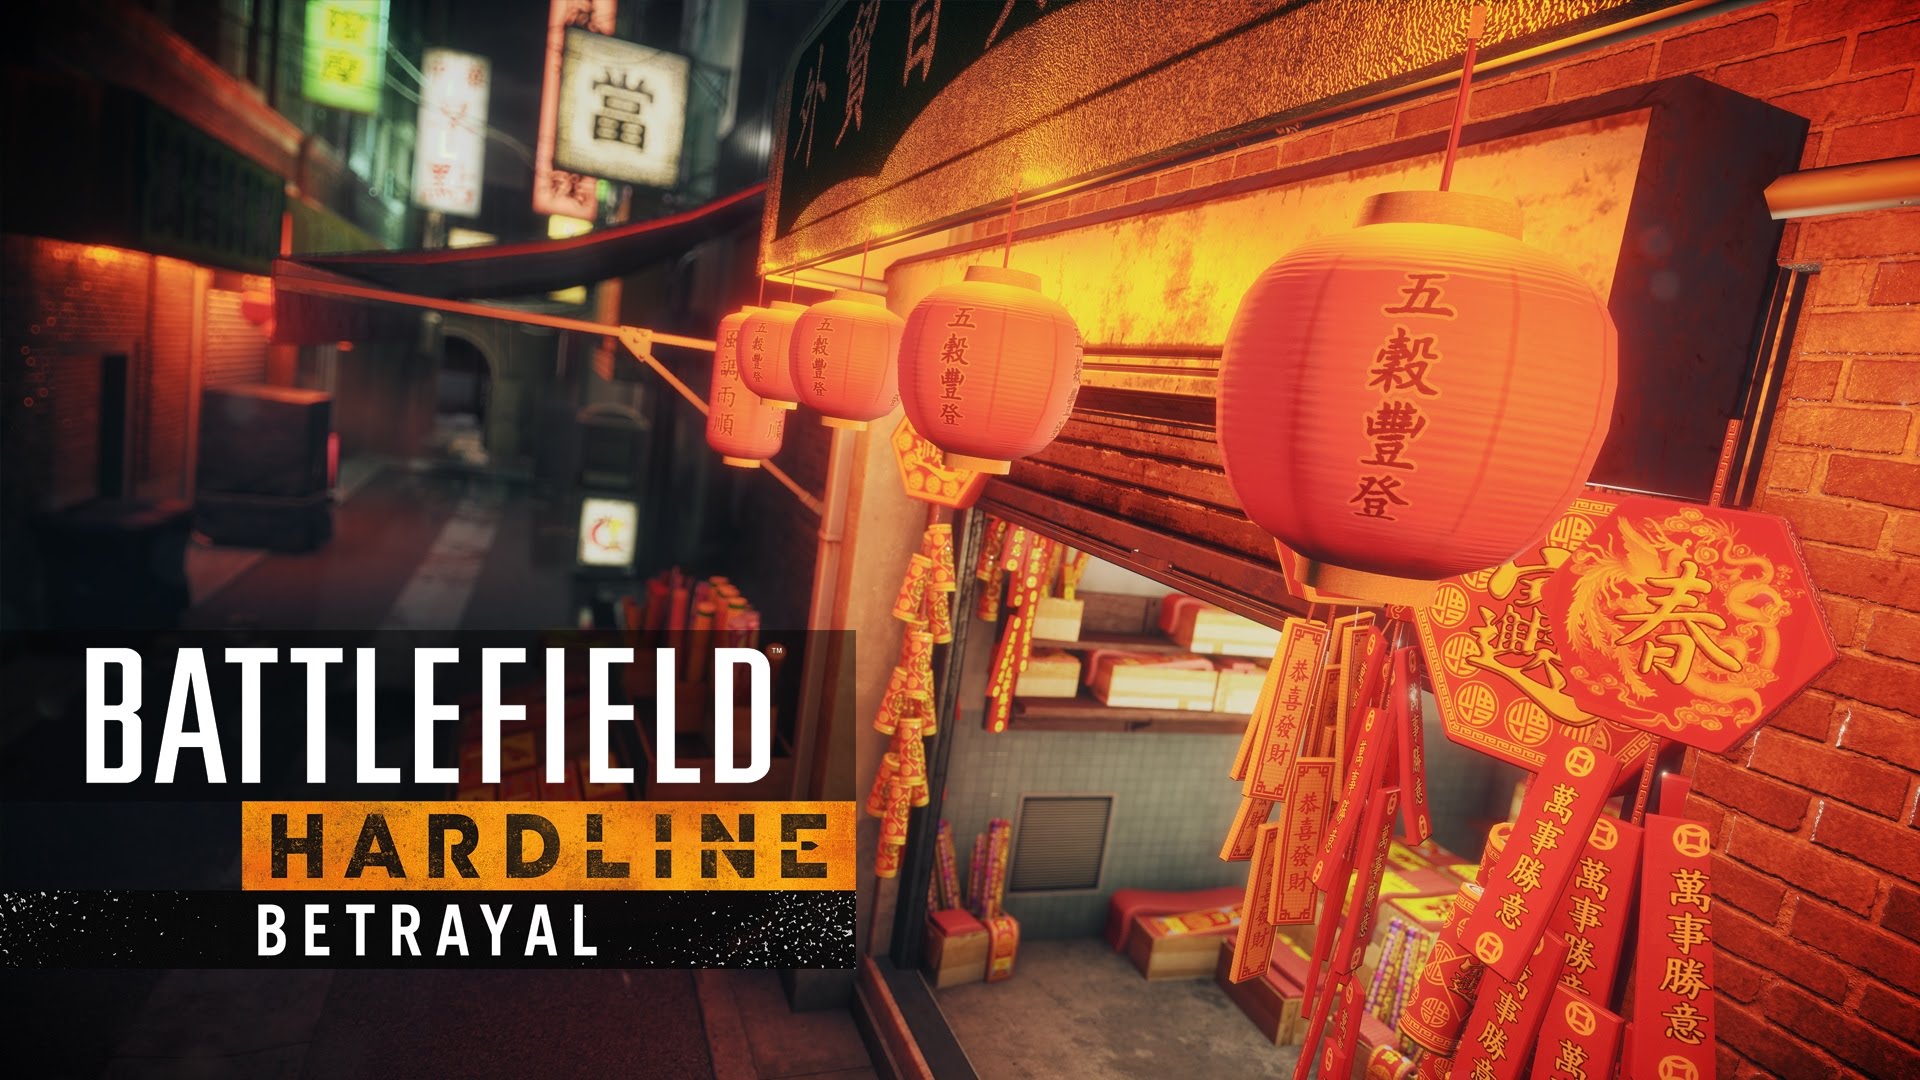 Battlefield Hardline: Betrayal - Behind the Scenes on Chinatown